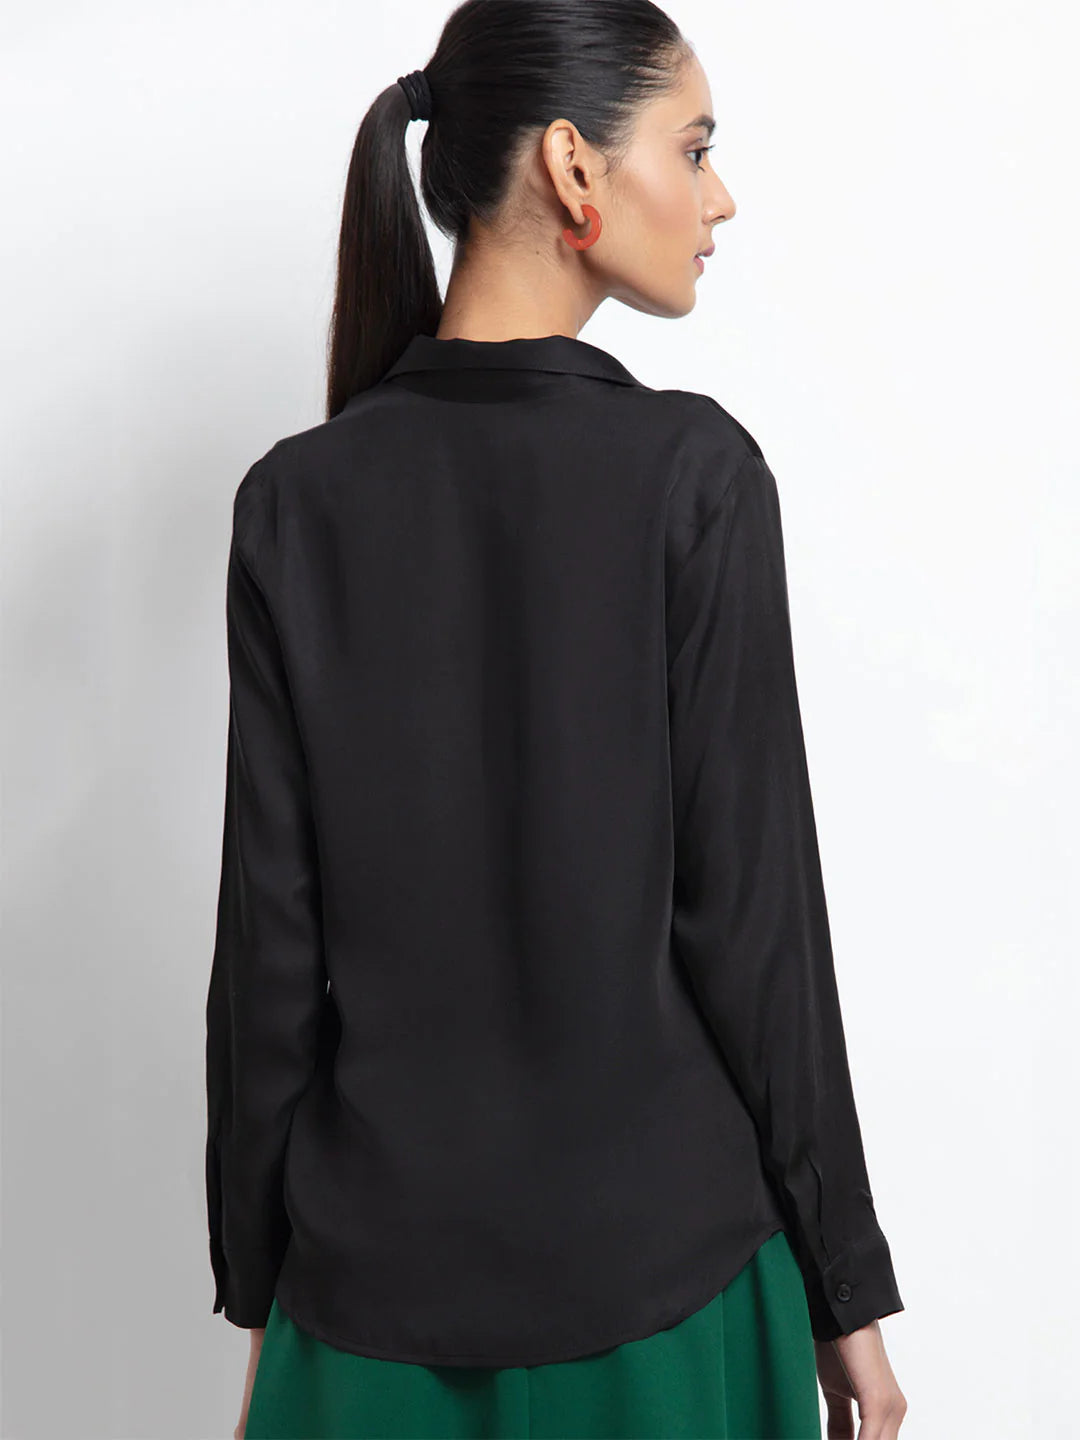 Black Shirt | Versatile Elegance Classic Black Shirt